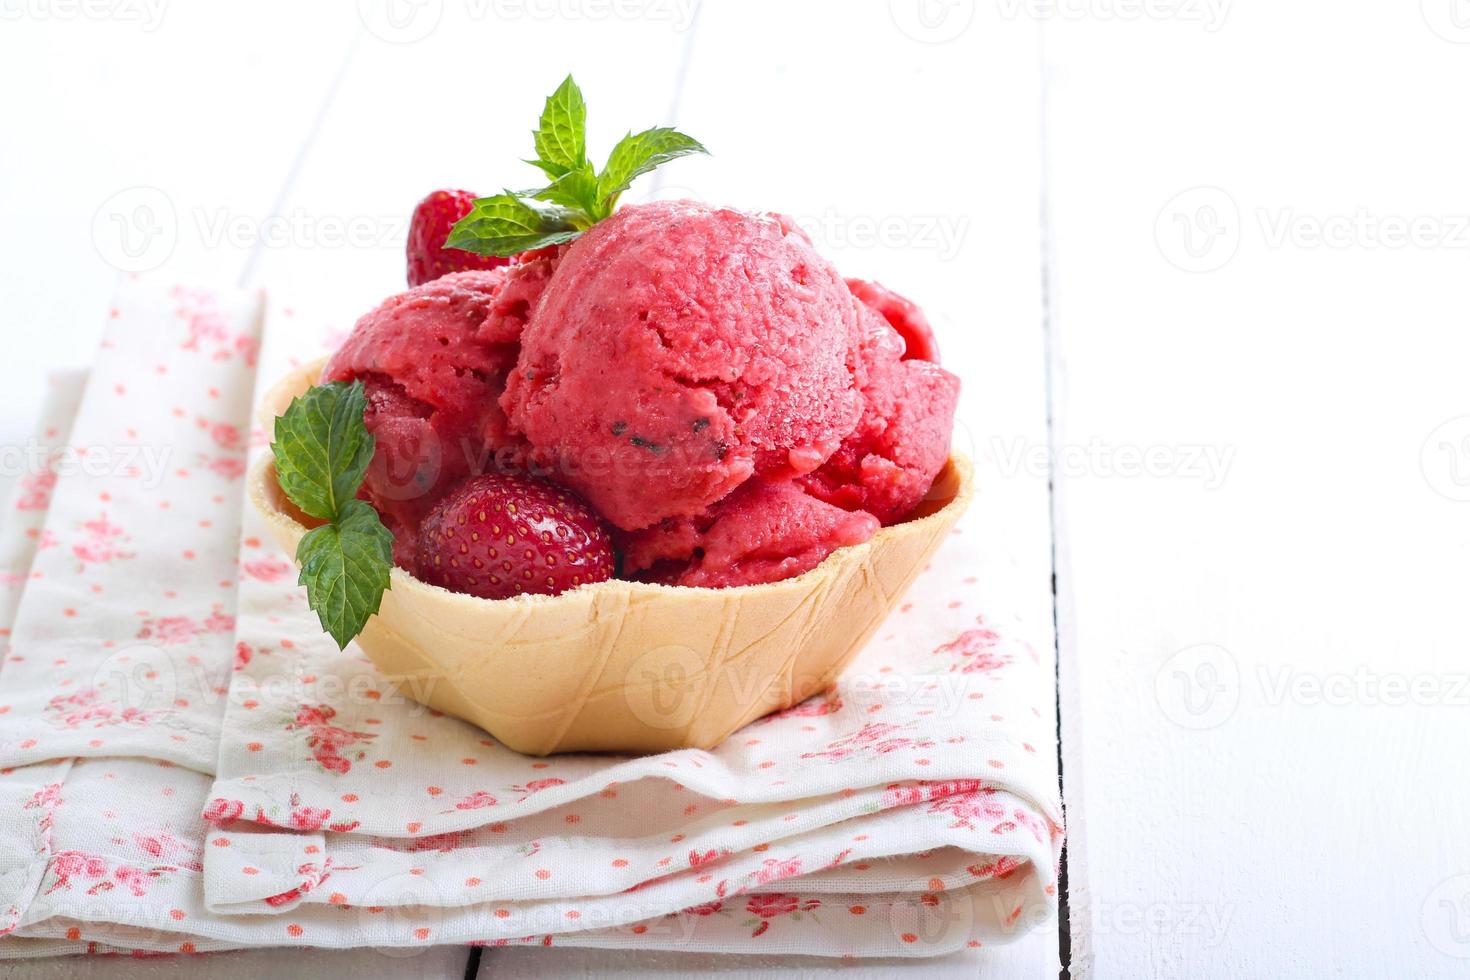 Strawberry and mint ice cream, photo